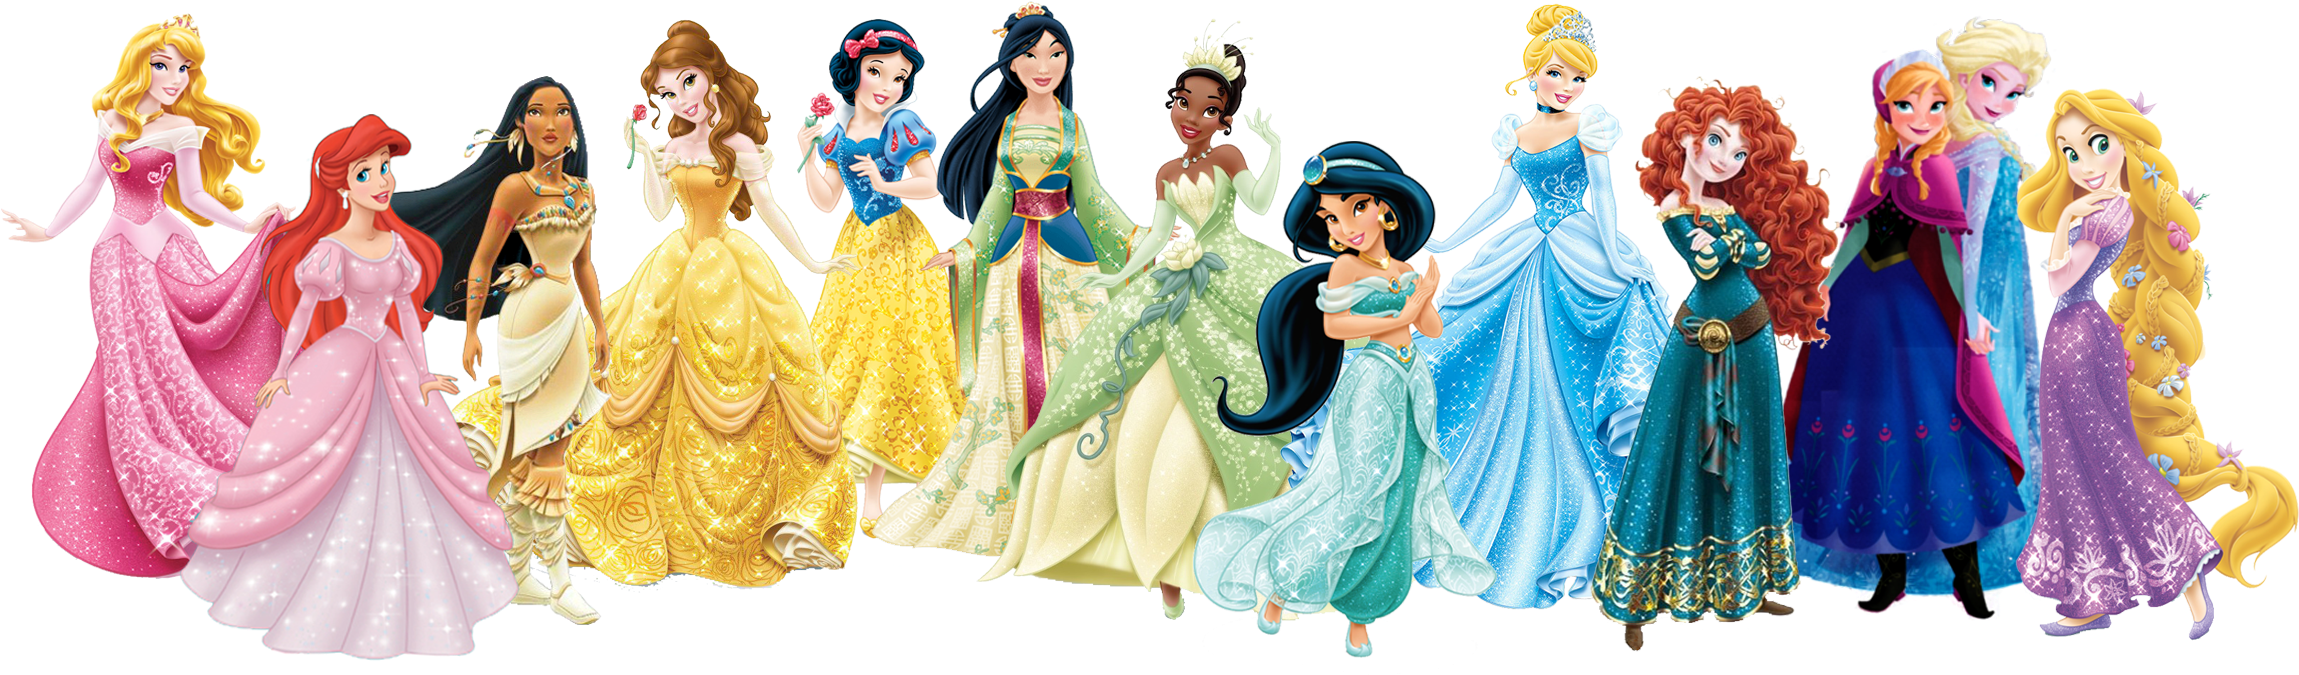 Disney Princesses PNG Clipart Background